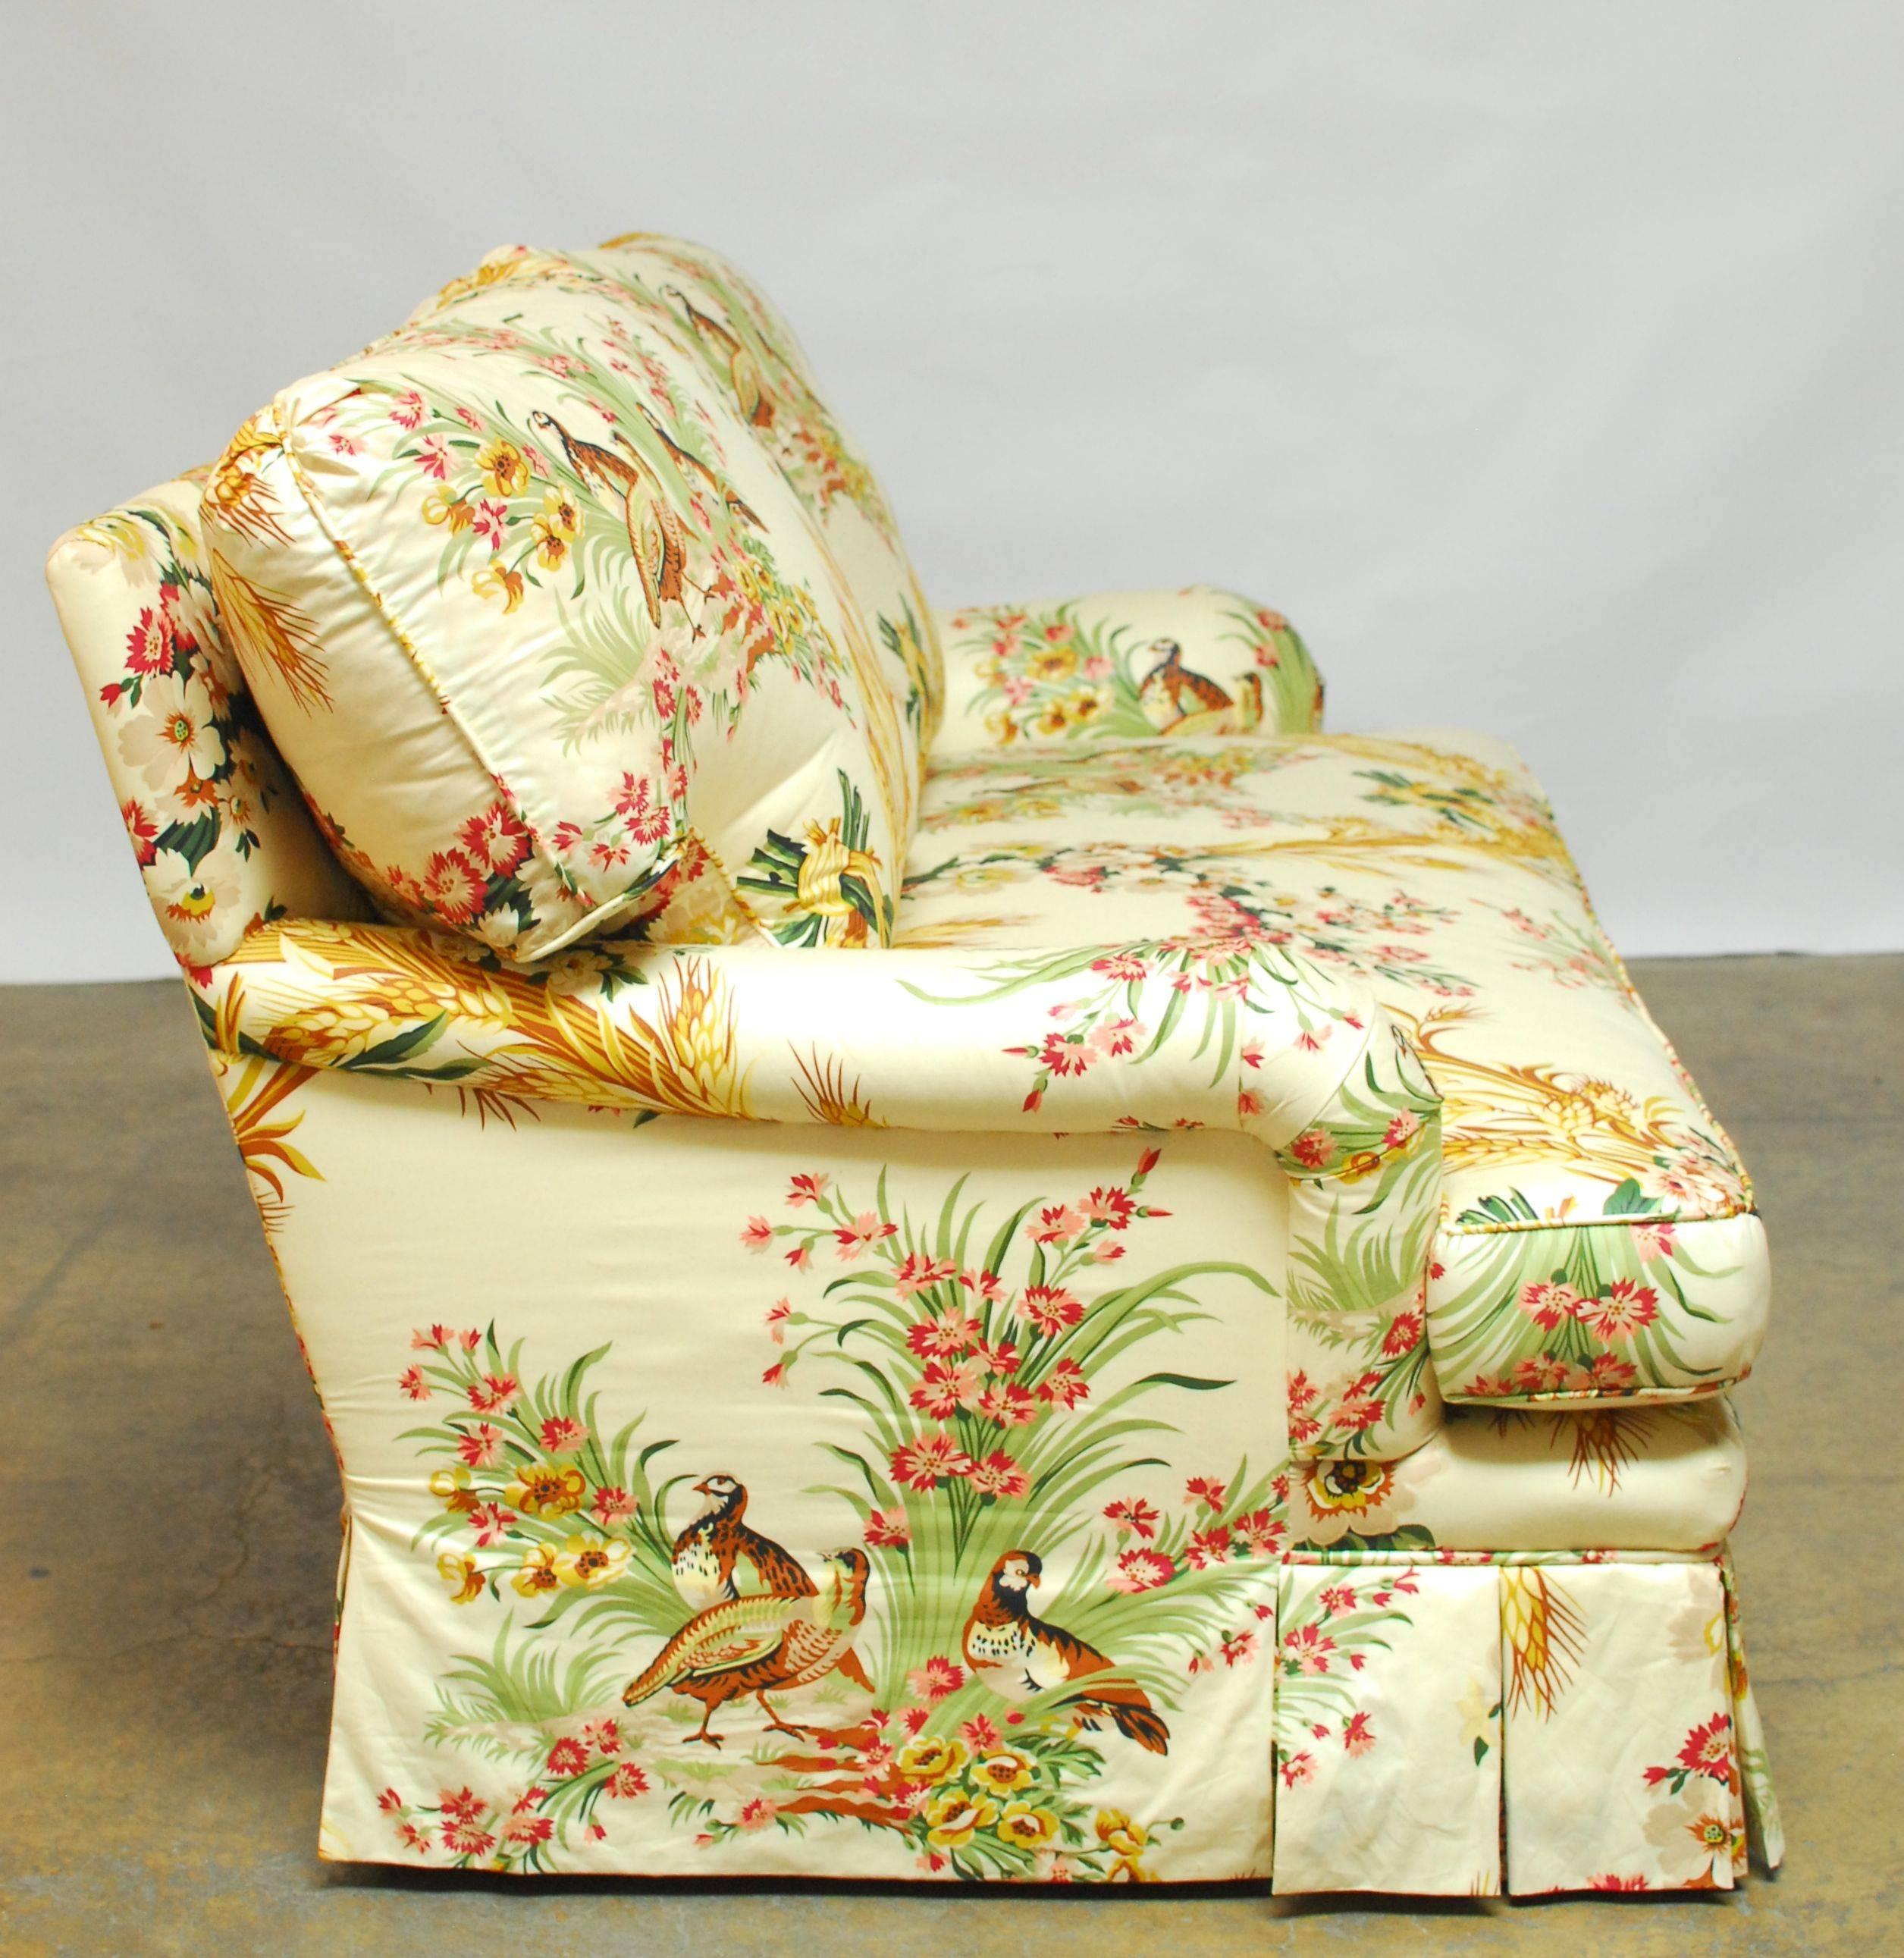 Fabulous custom sofa by Brunschwig & Fils in a stunning 